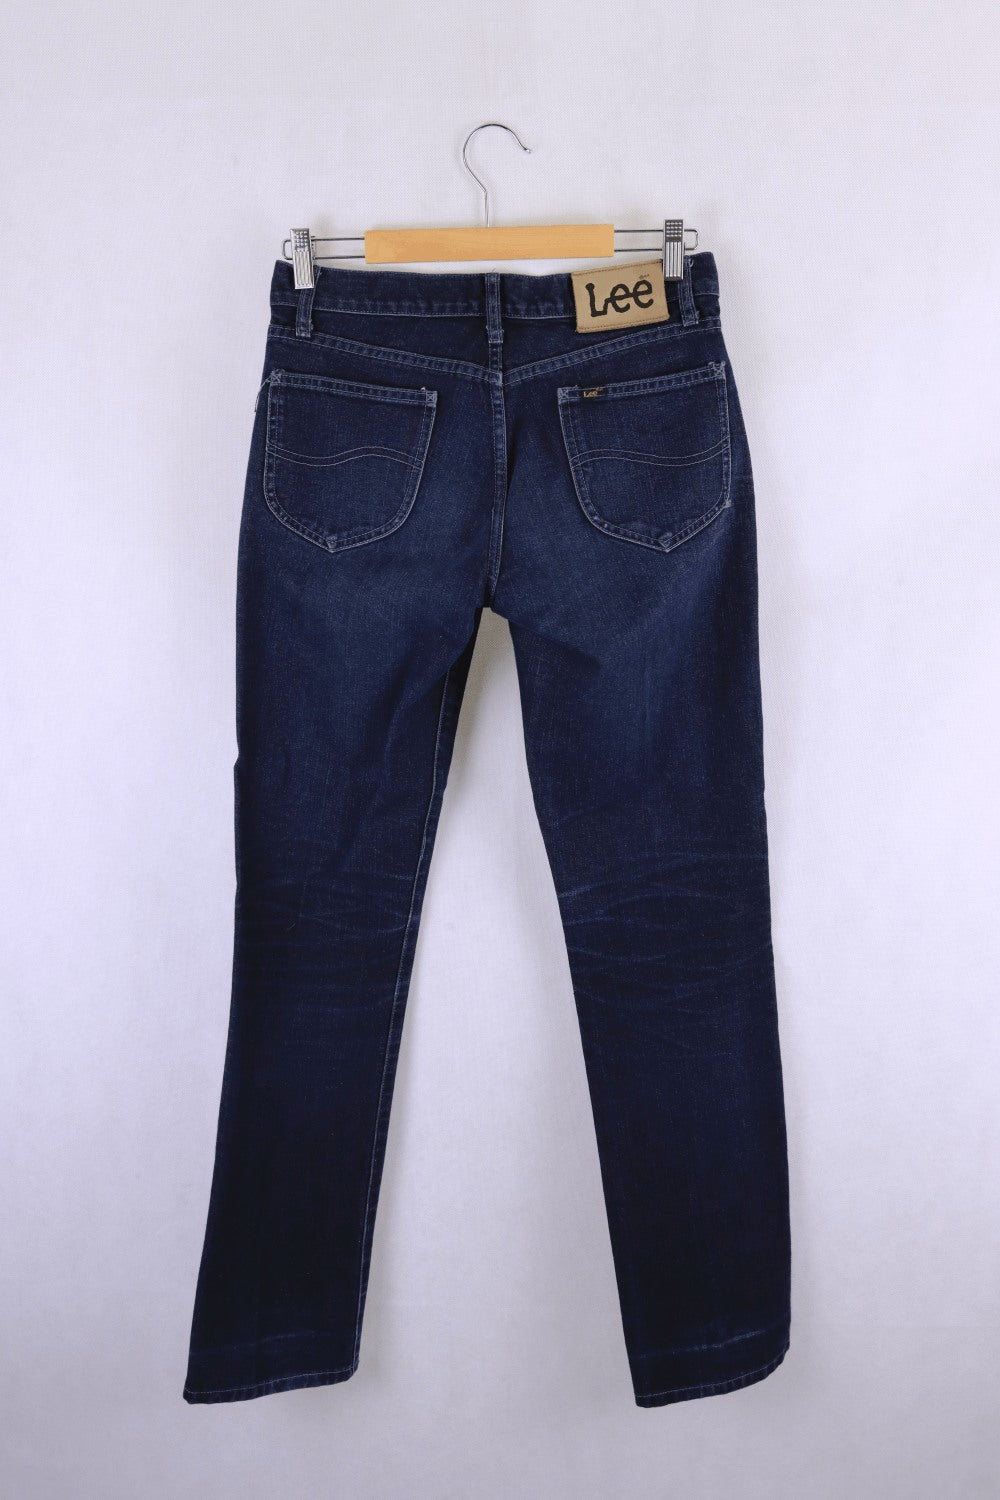 Lee Jeans Blue 10